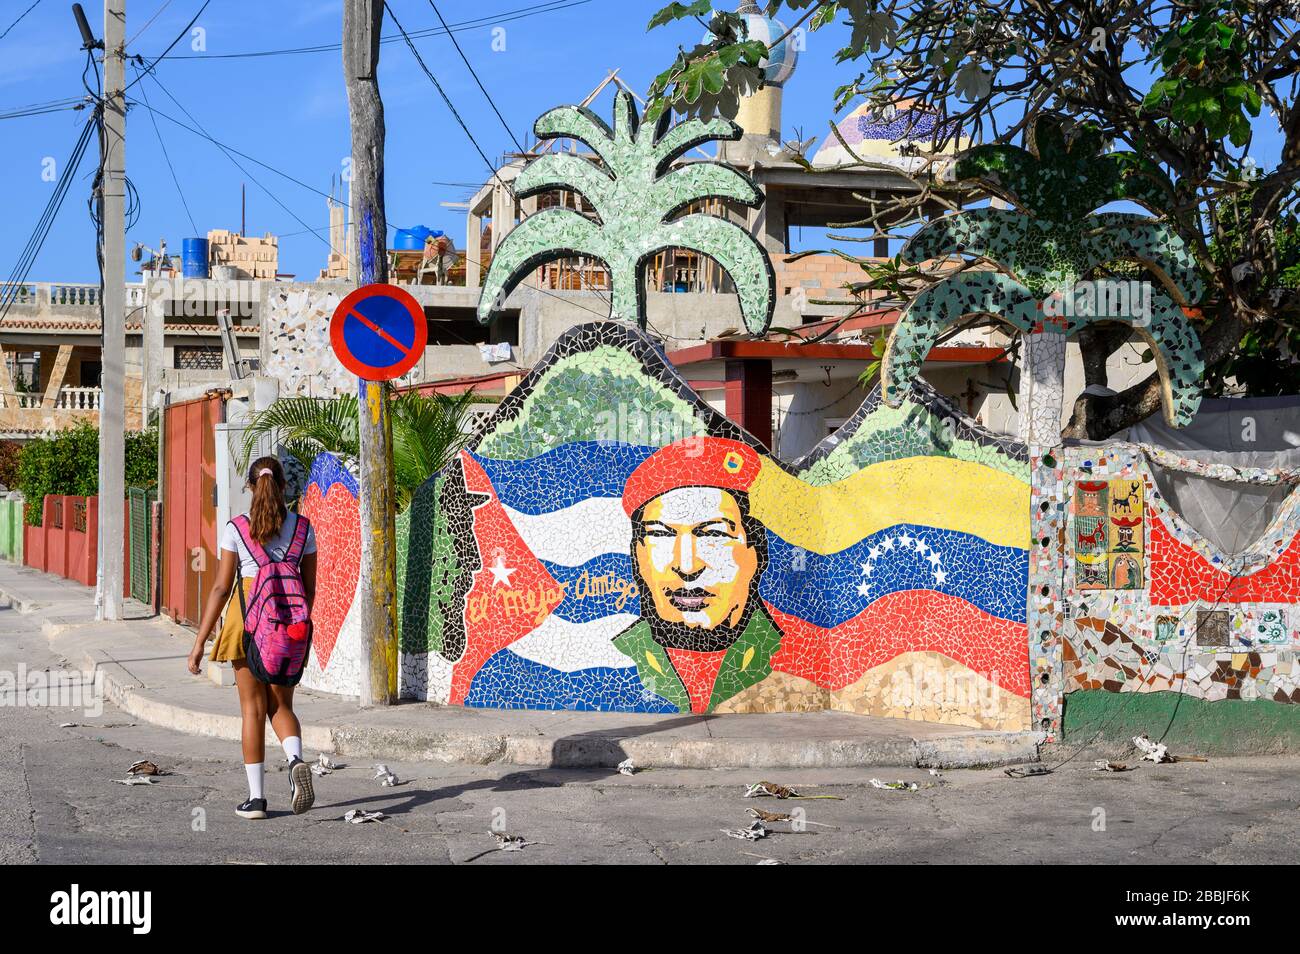 Fusterlandia, public-art installations by local artist José Fuster, with colorful, whimsical mosaics, Playa de Jaimanitas, Havana, Cuba Stock Photo